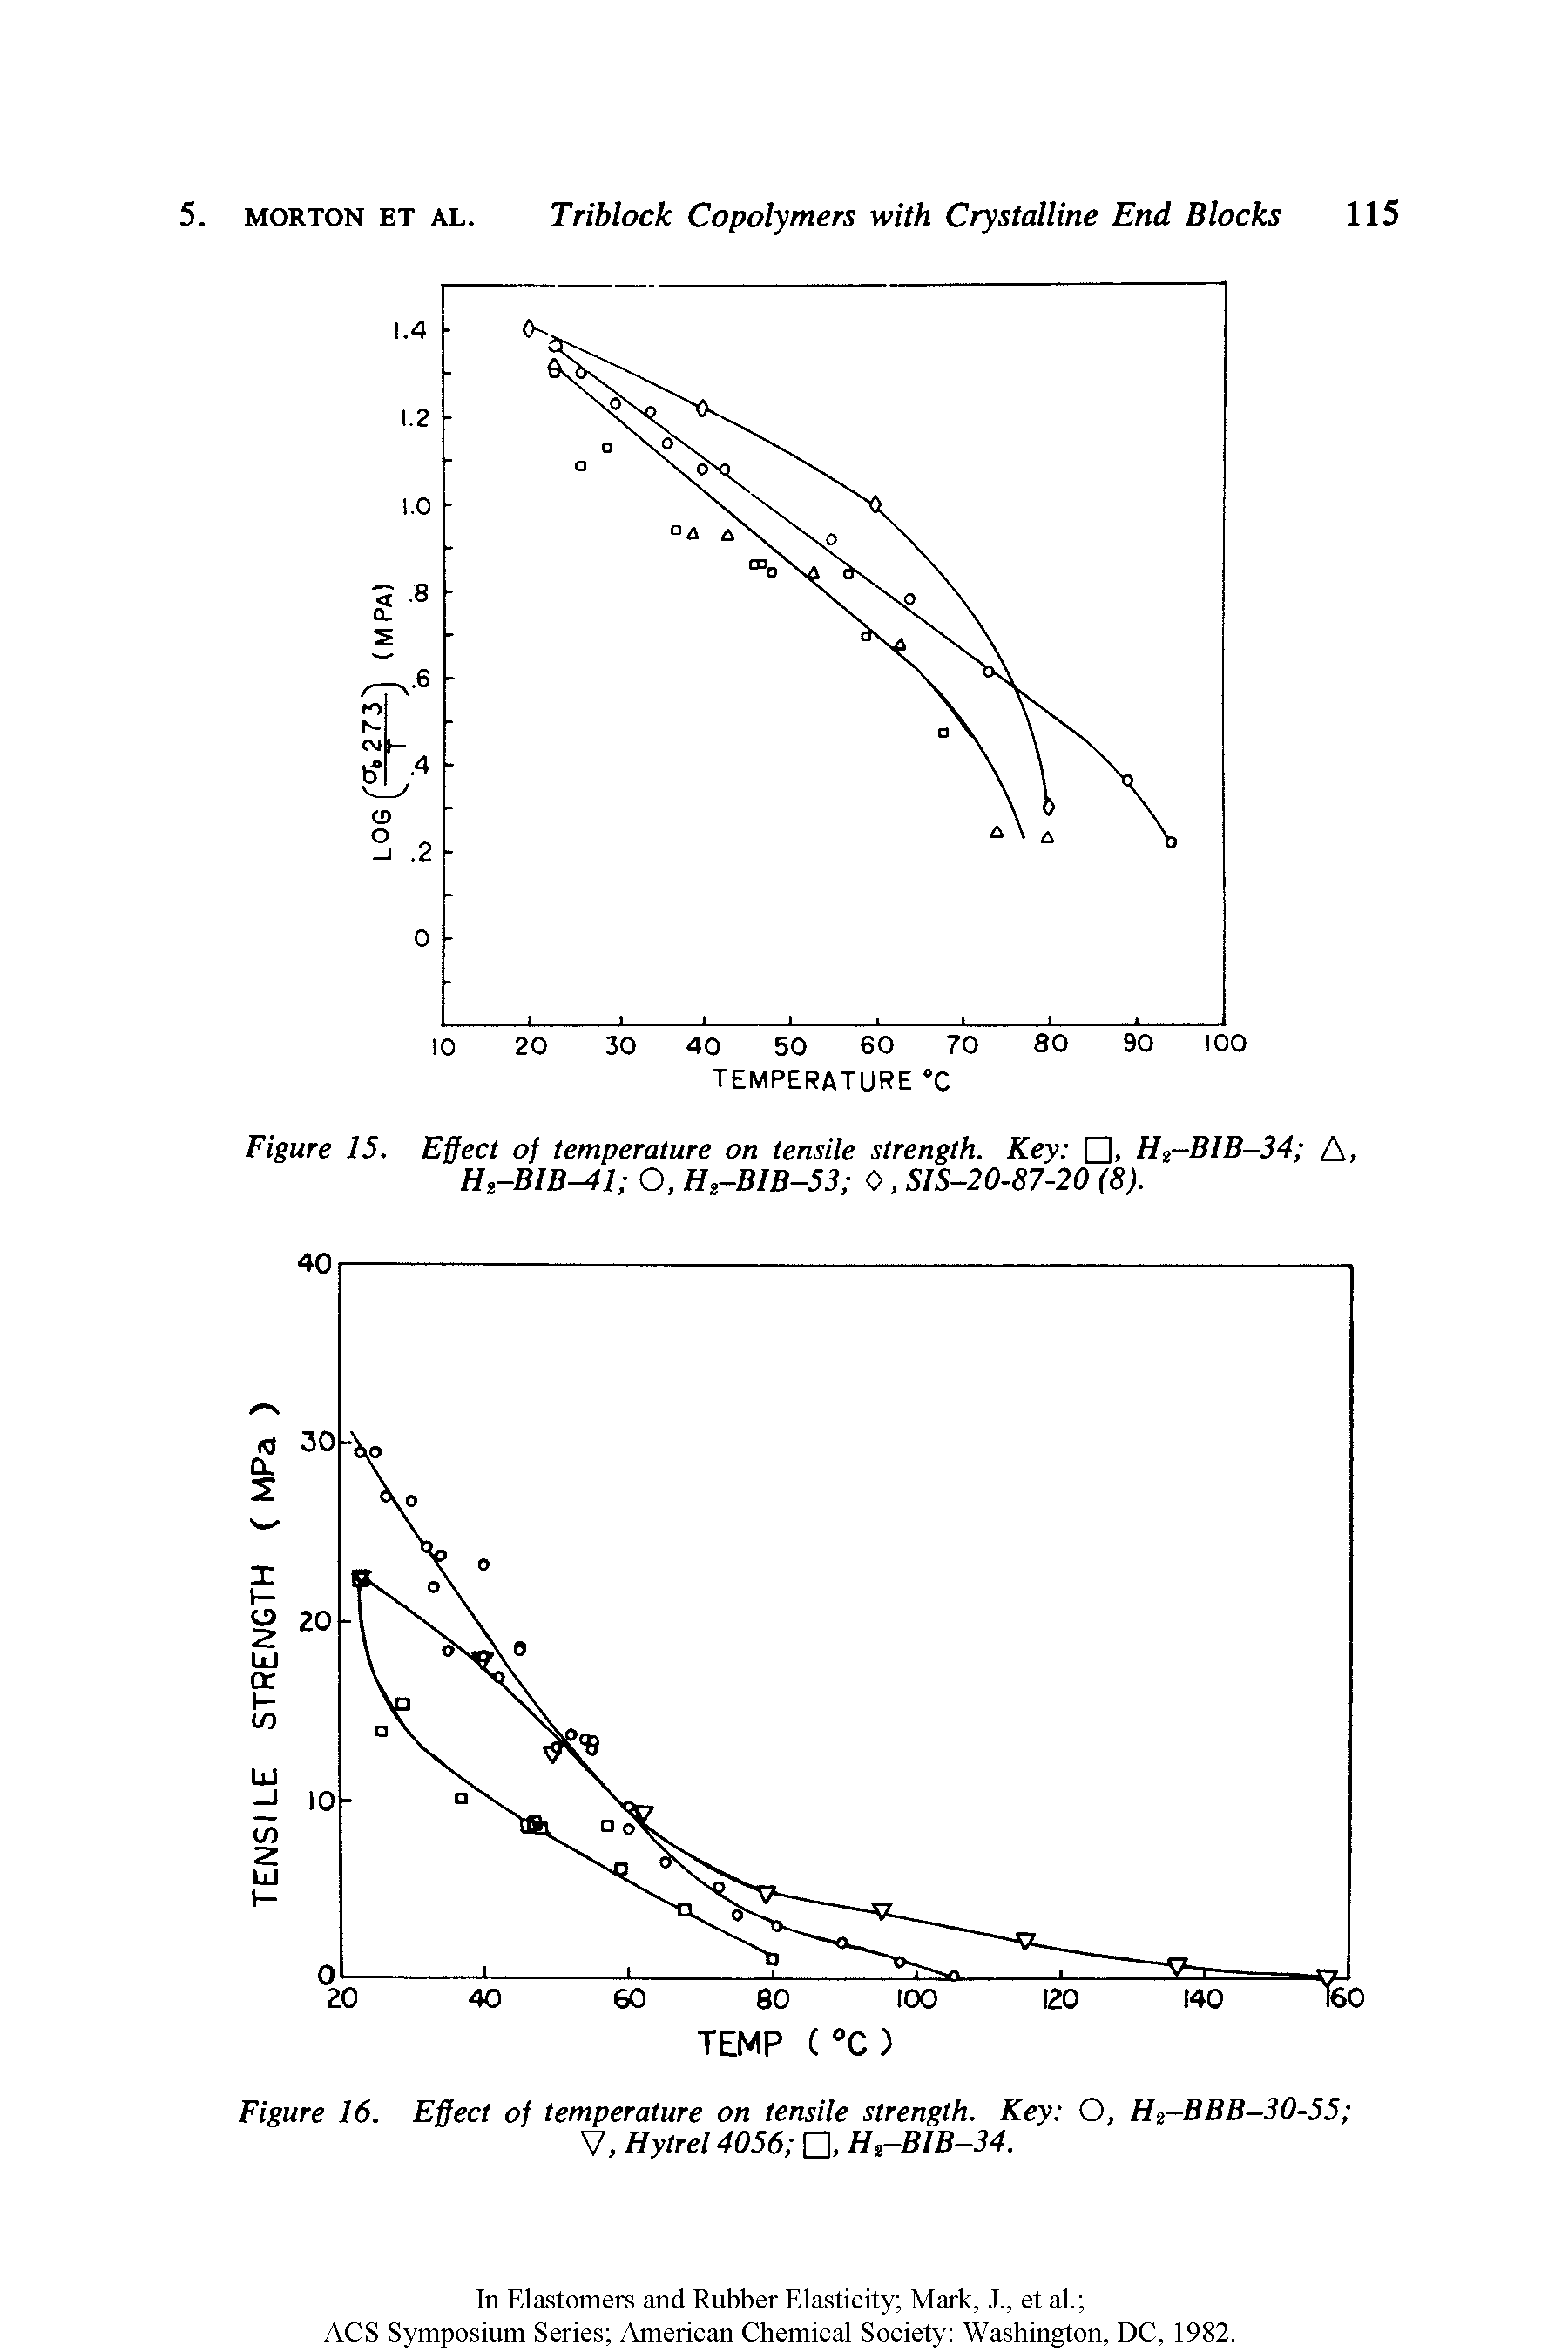 Figure 16. Effect of temperature on tensile strength. Key O, Hr-BBB-30-55 V, Hytrel 4056 , H2-BIB-34.